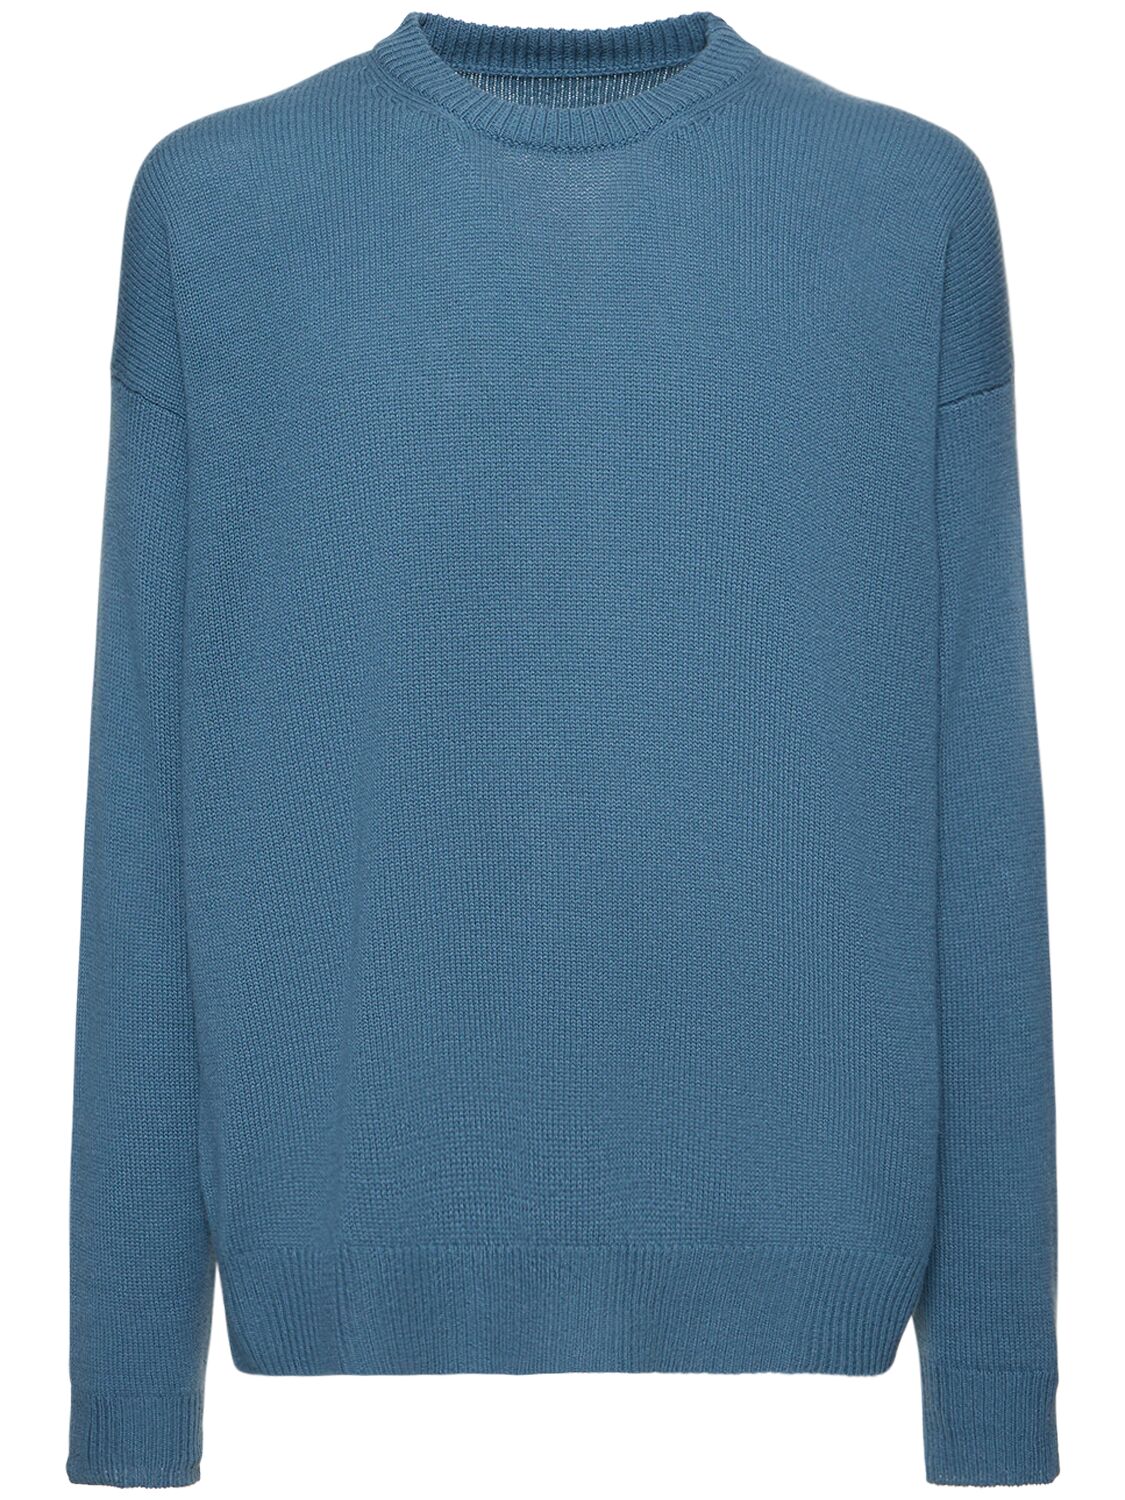 Image of Boxy Cashmere Sweater